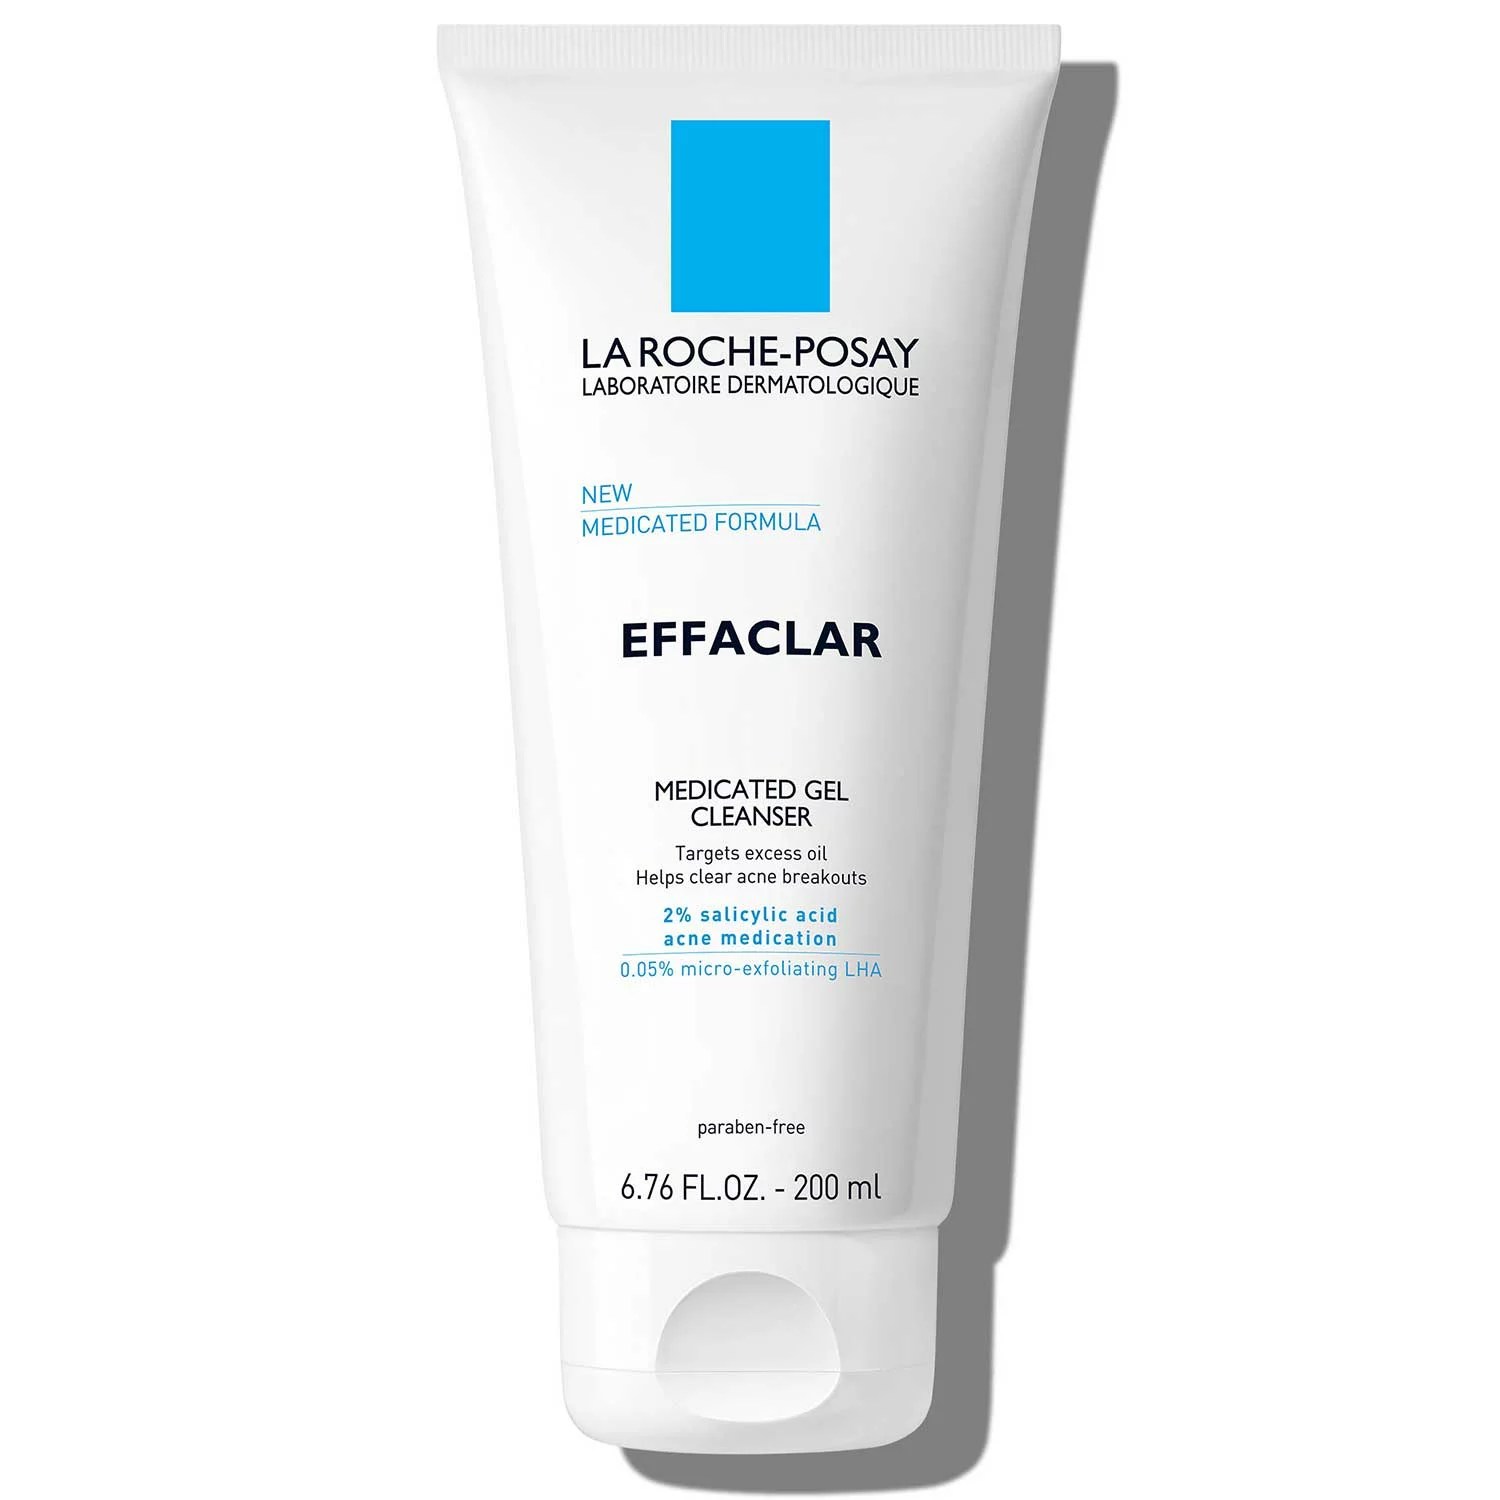 La Roche-Posay Effaclar Medicated Gel Cleanser for Acne Prone Skin